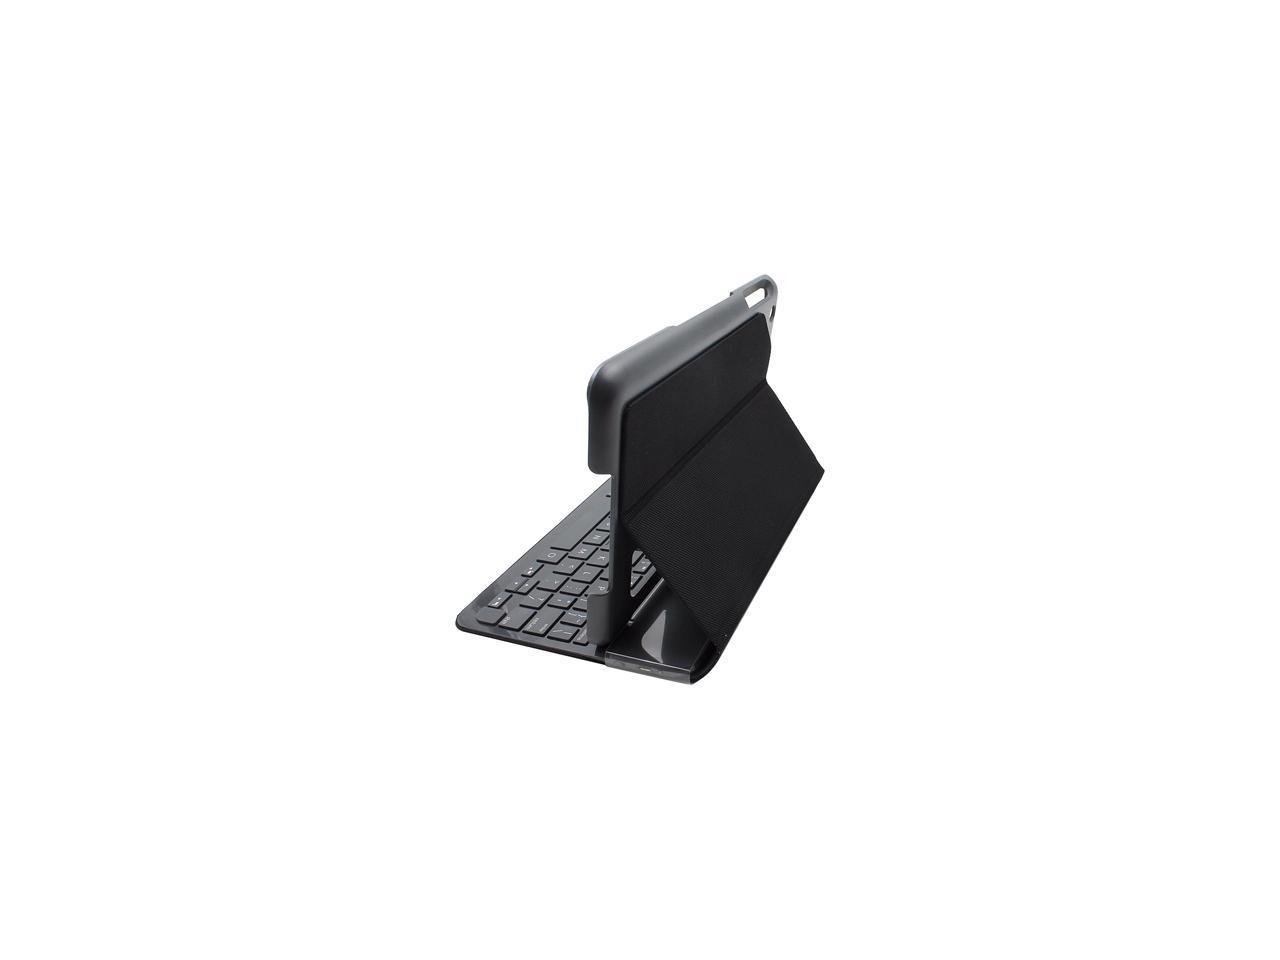 manual logitech keyboard case ipad 2